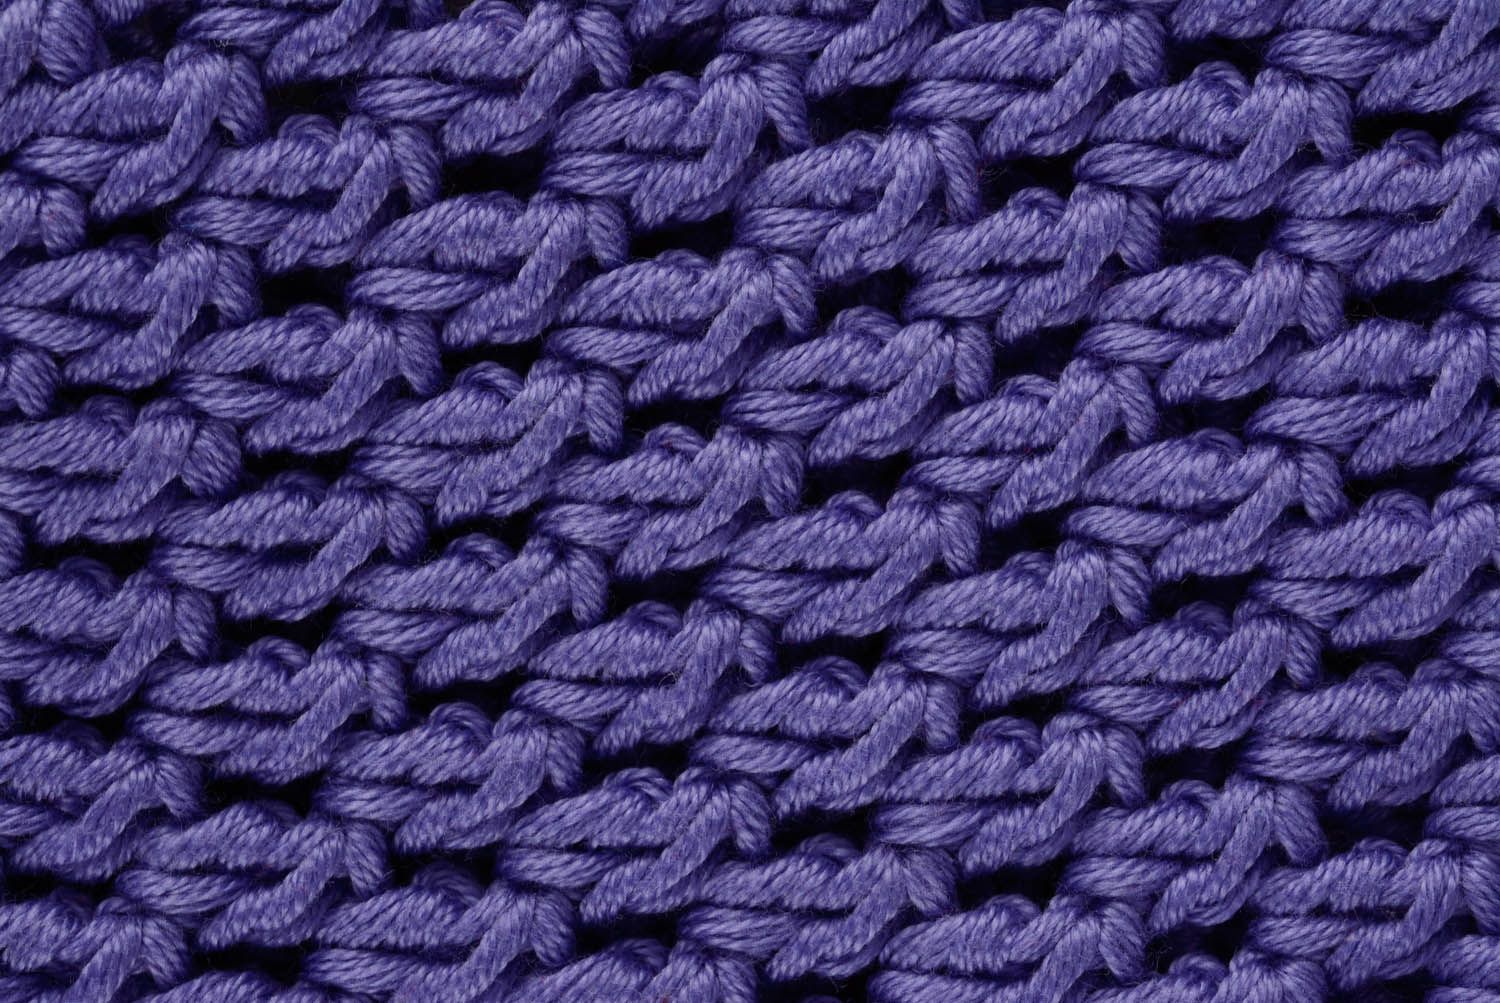 Crocheted purple purse photo 5